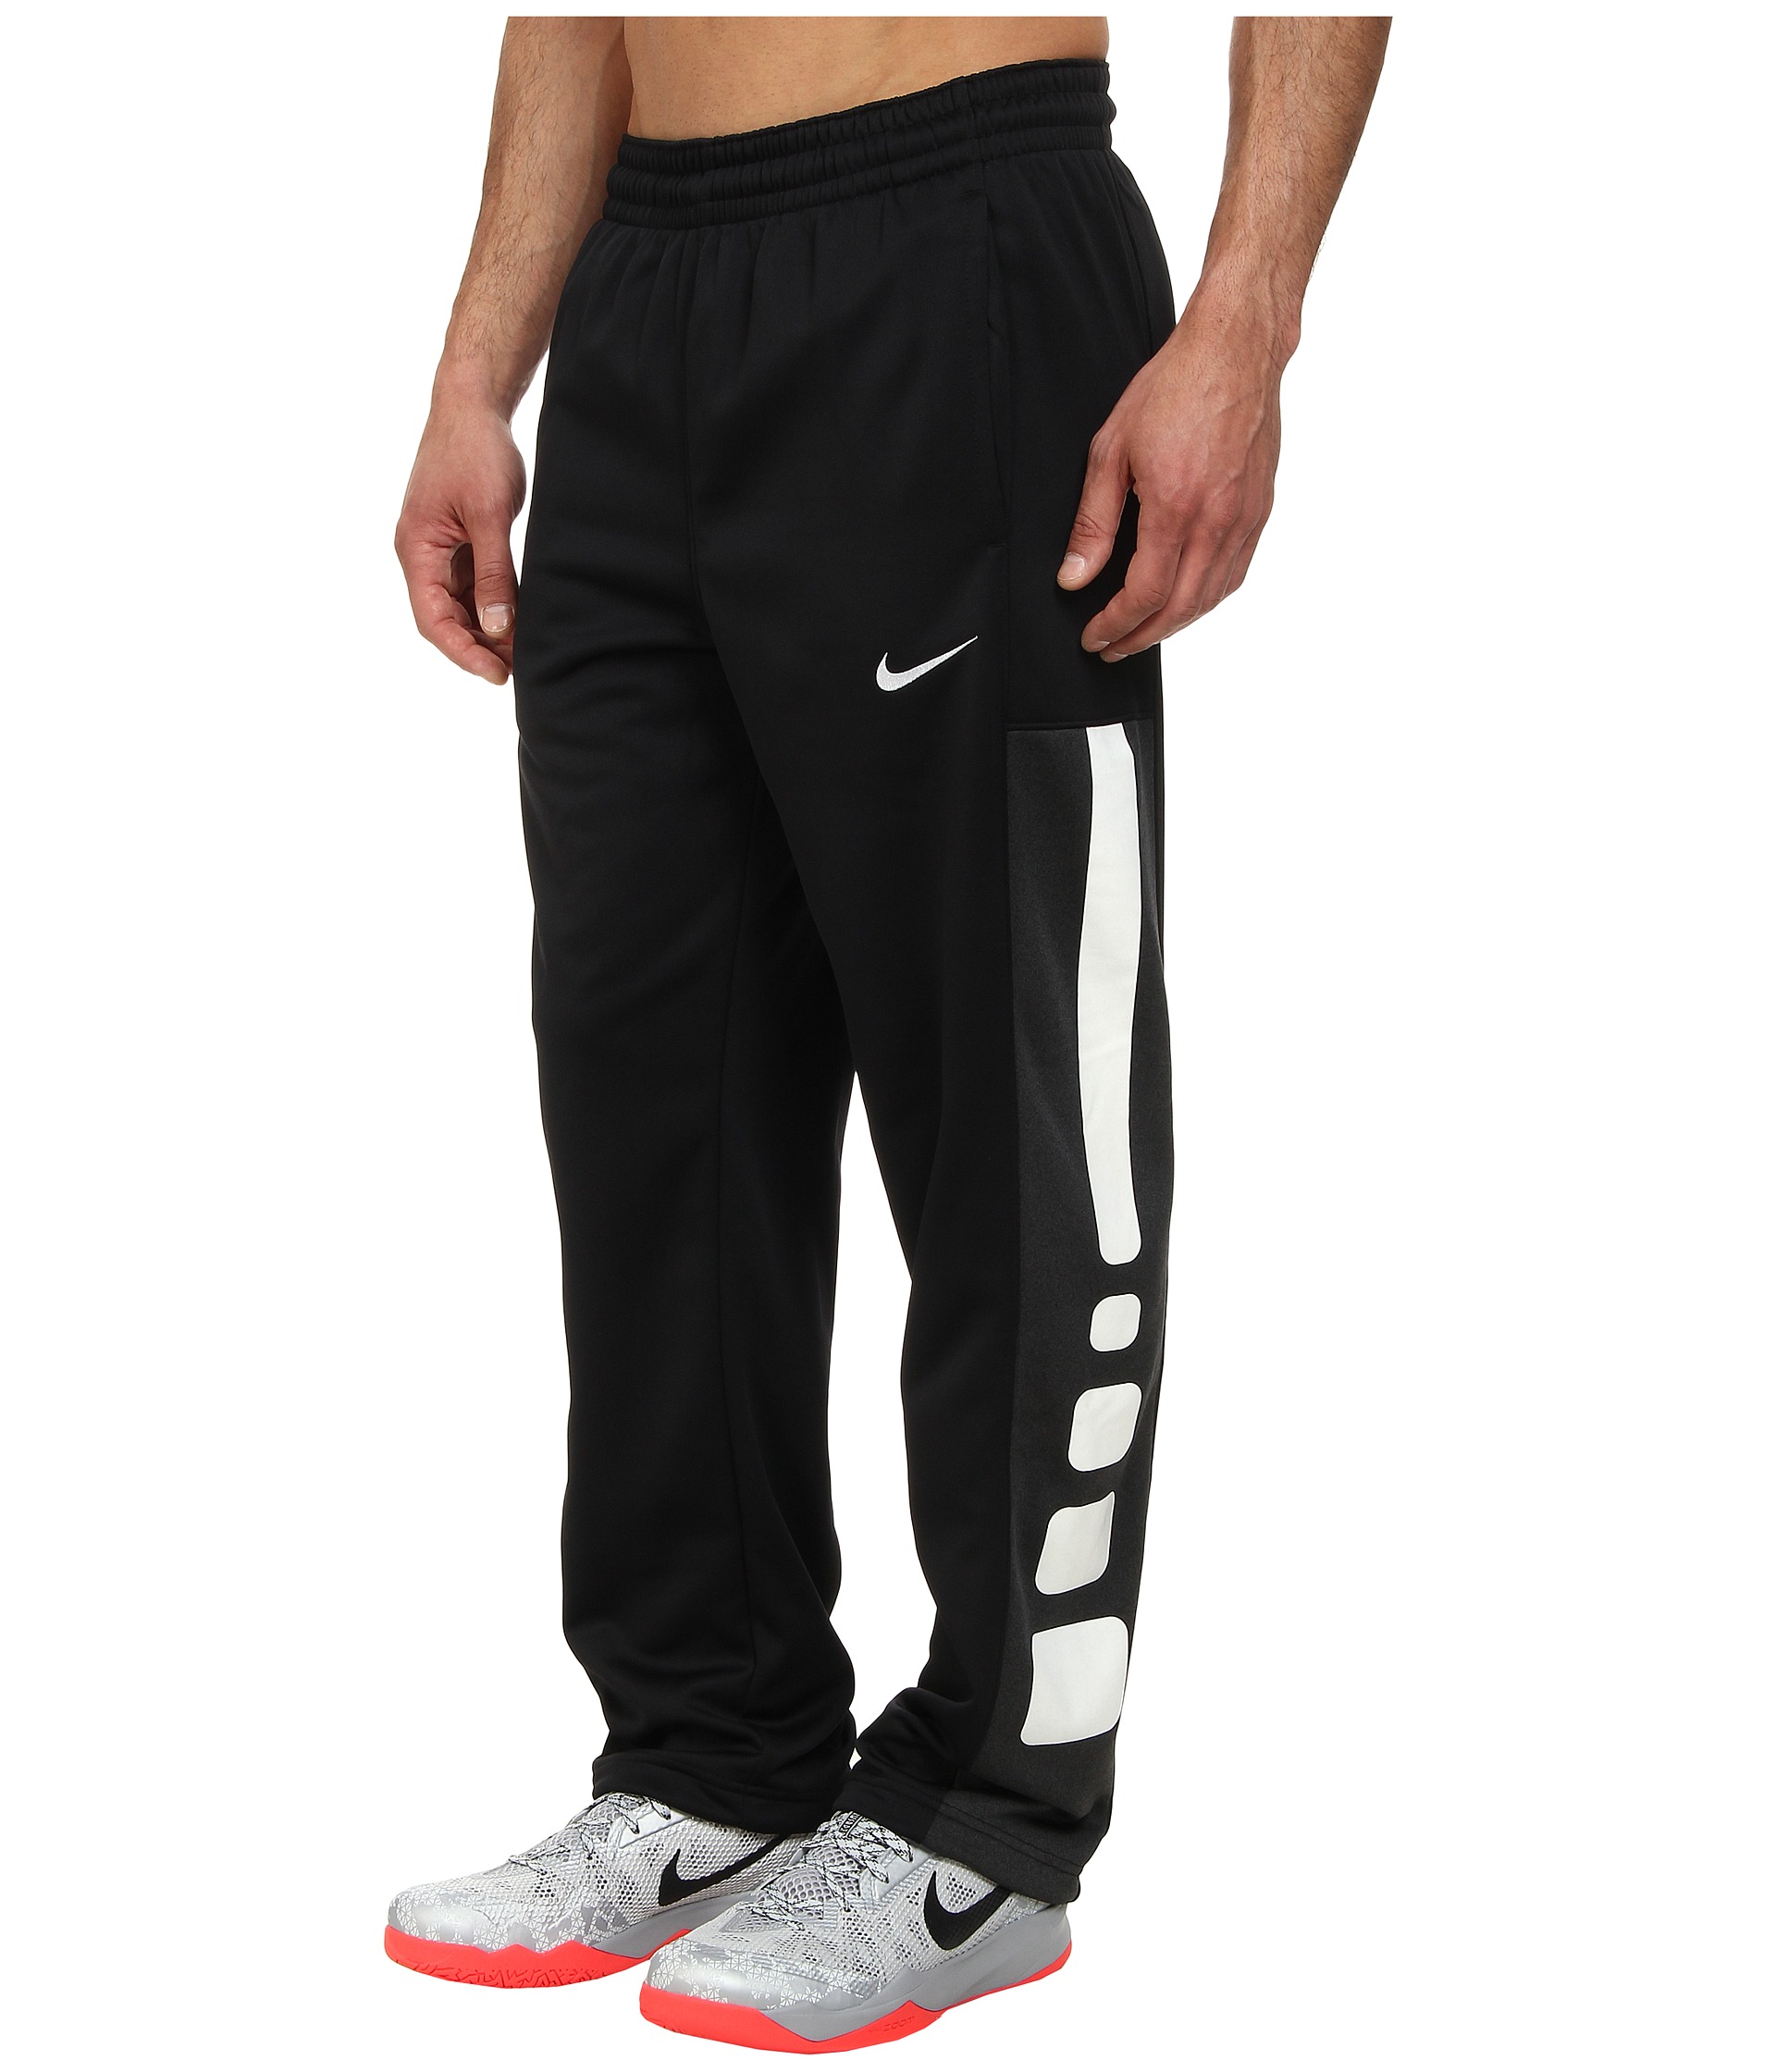 Nike Elite Stripe Performance Fleece Pant | Shipped Free at Zappos